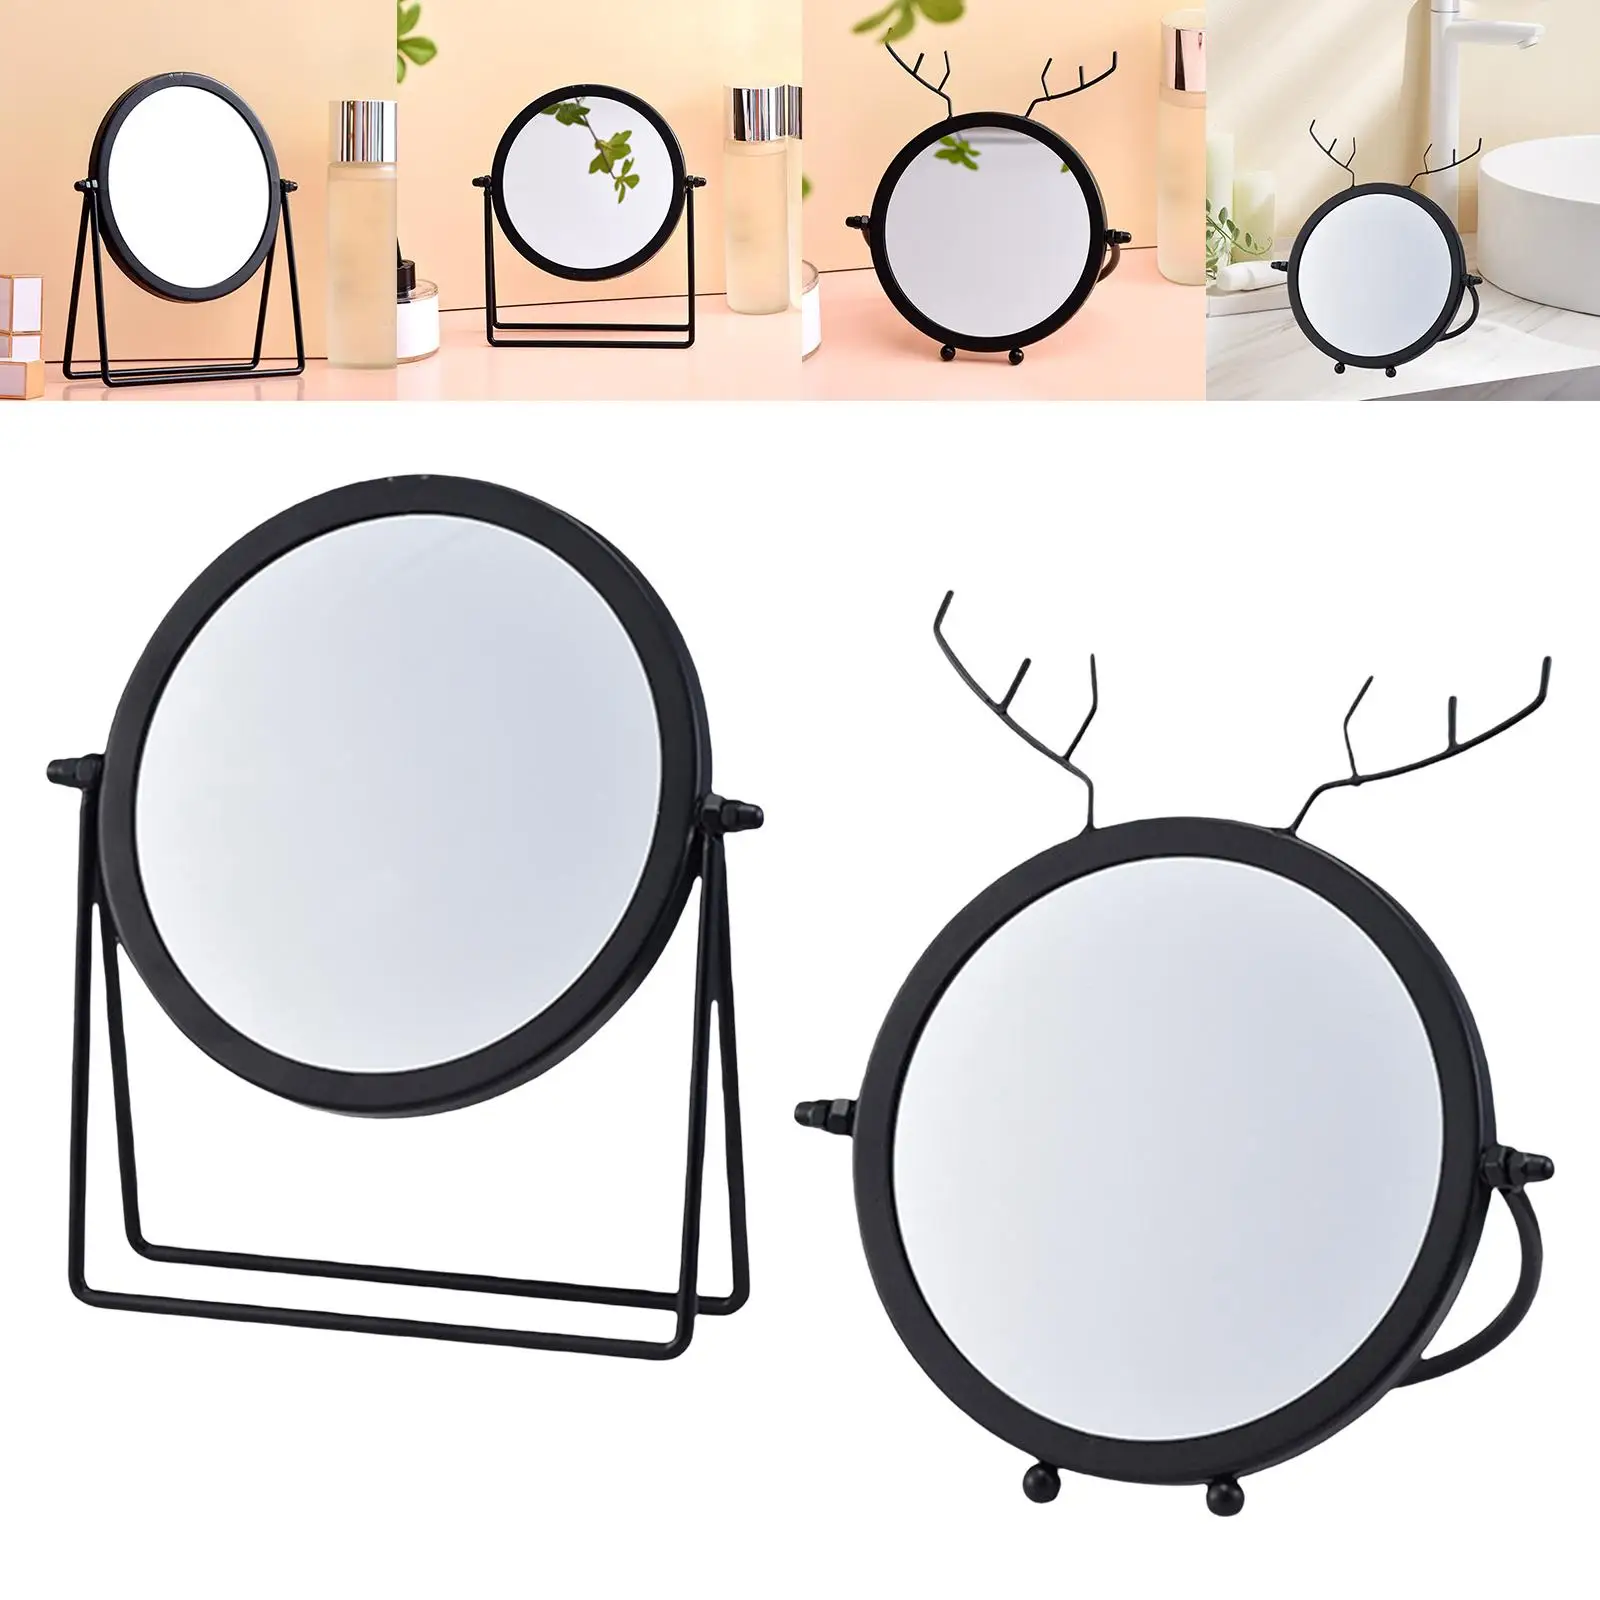 Table Mirror Single Sided Dressing Table Mirror 360 Degree Swivel Mirror Simple Desk Mirror for Dresser Tabletop Bathroom Home